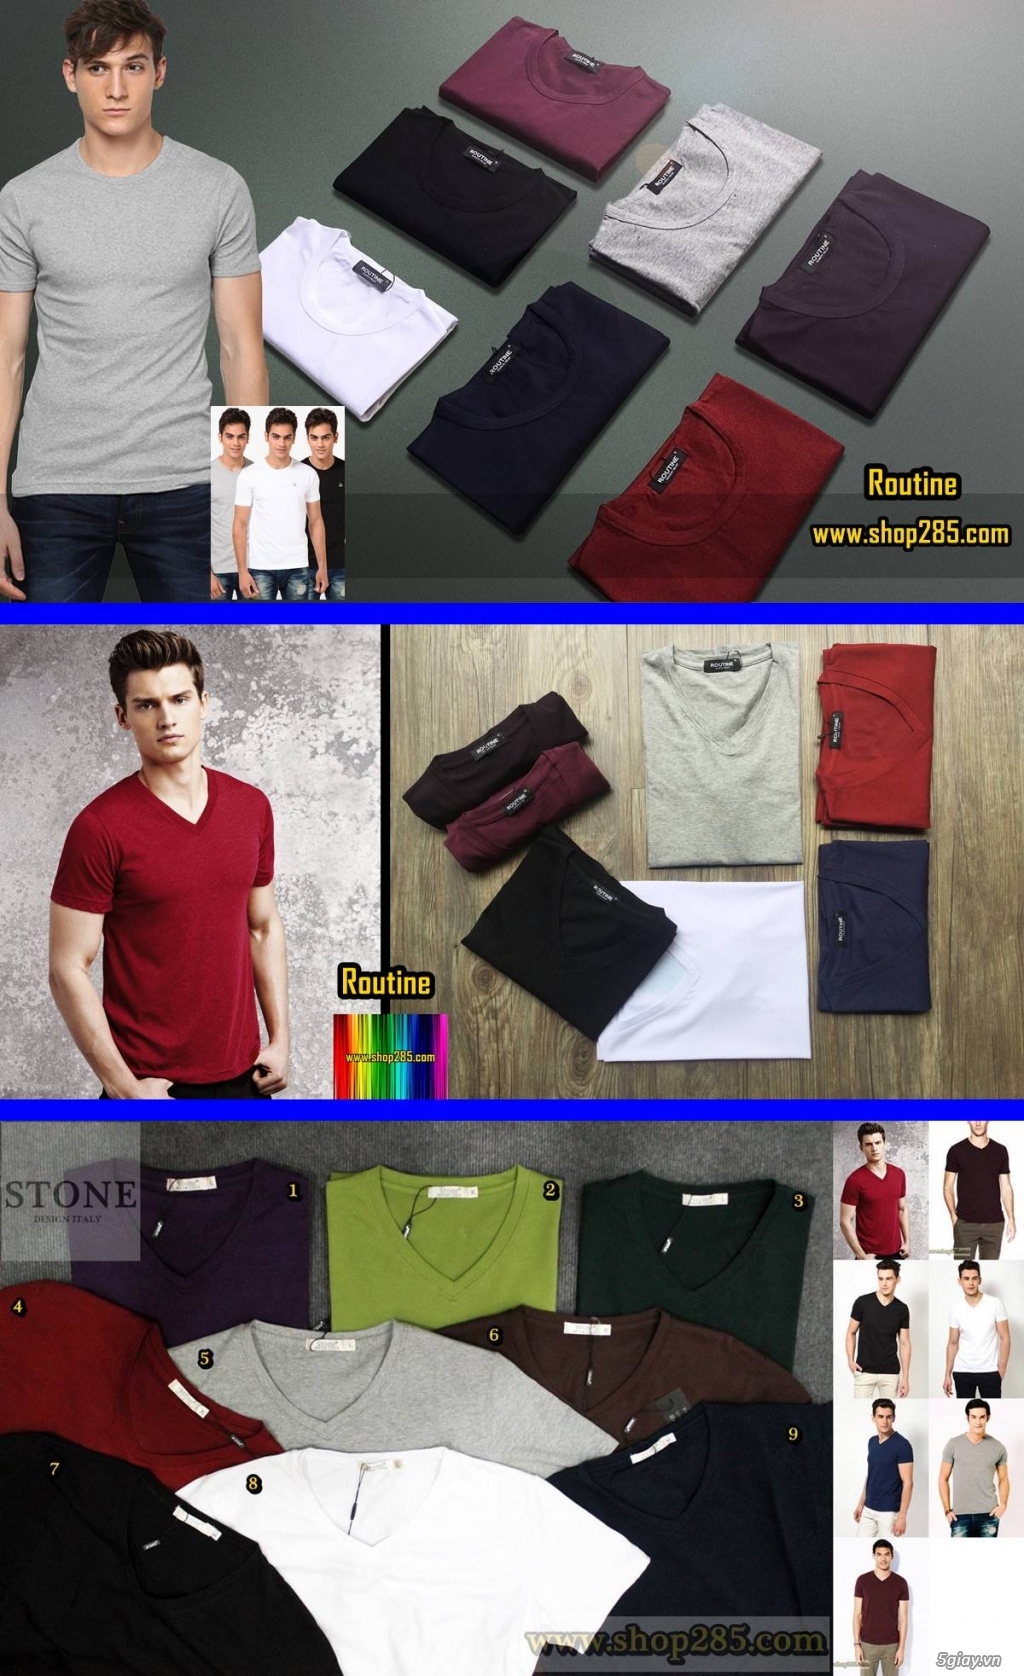 Shop285.com - Shop quần áo : Express,Zara,Jules,Jake*s,SuperDry,Hollister,Aber, Polo - 33